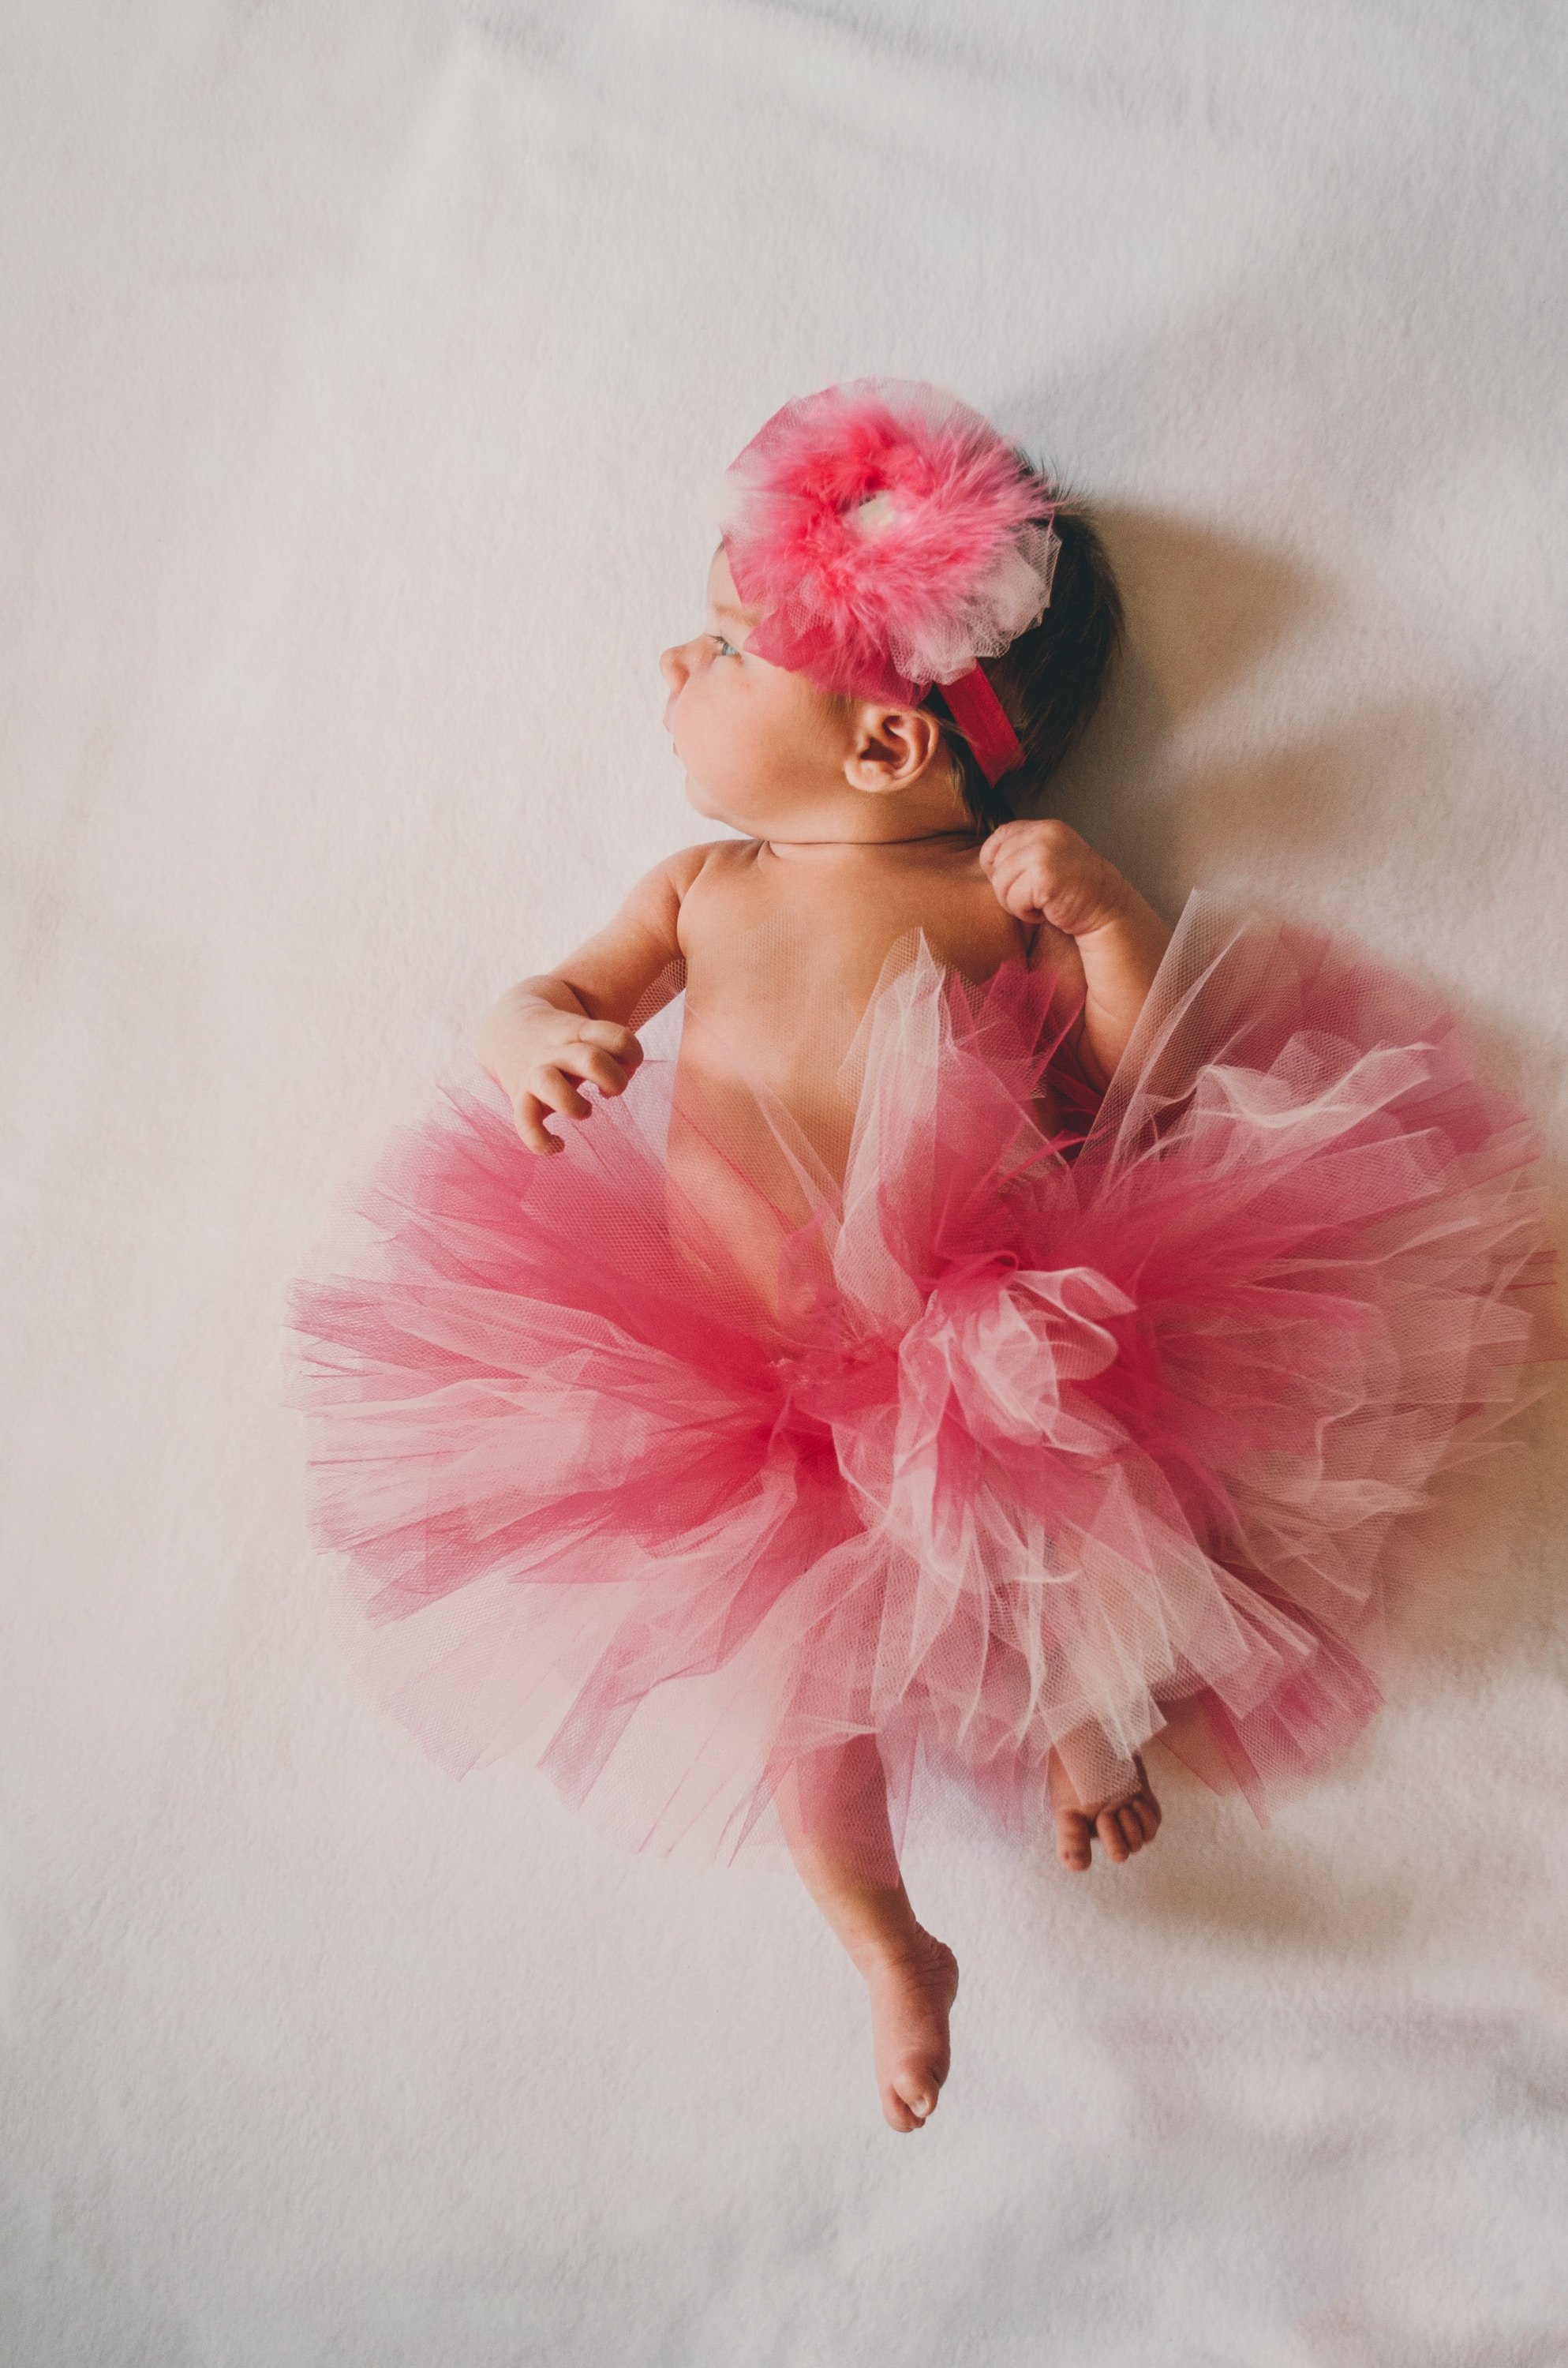 A baby in a ballerina costume | Source: Unsplash.com